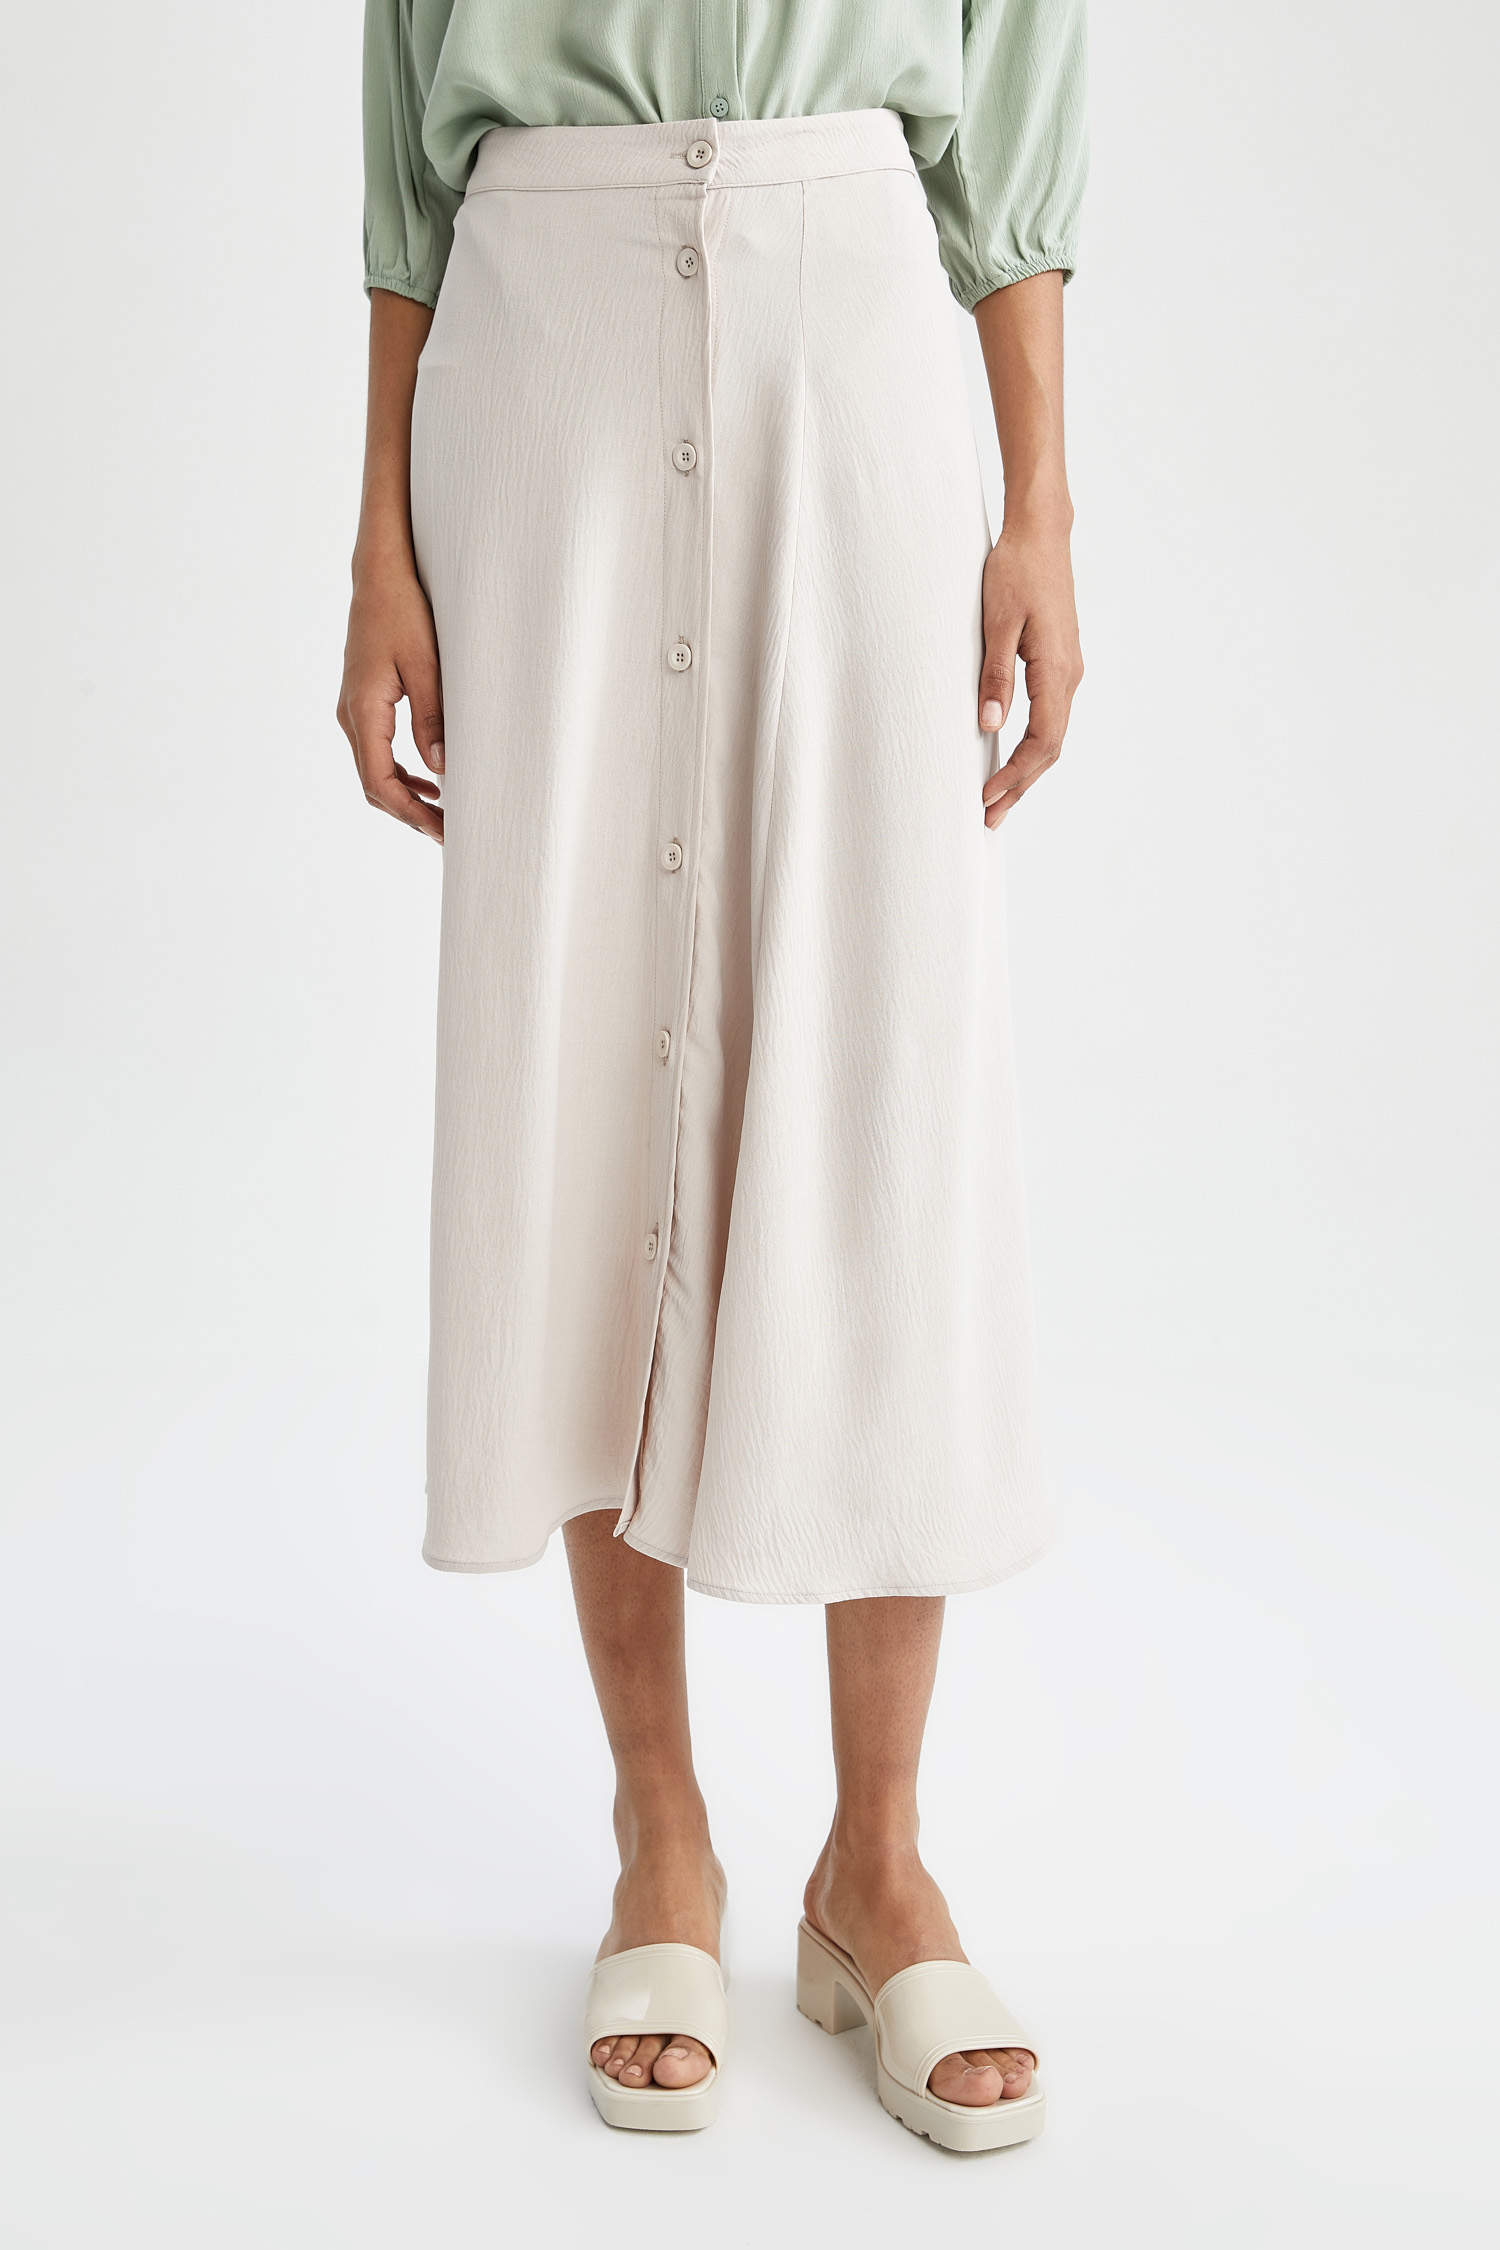 High Waisted Midi Skirt A Line Sale Outlet, Save 65% | jlcatj.gob.mx